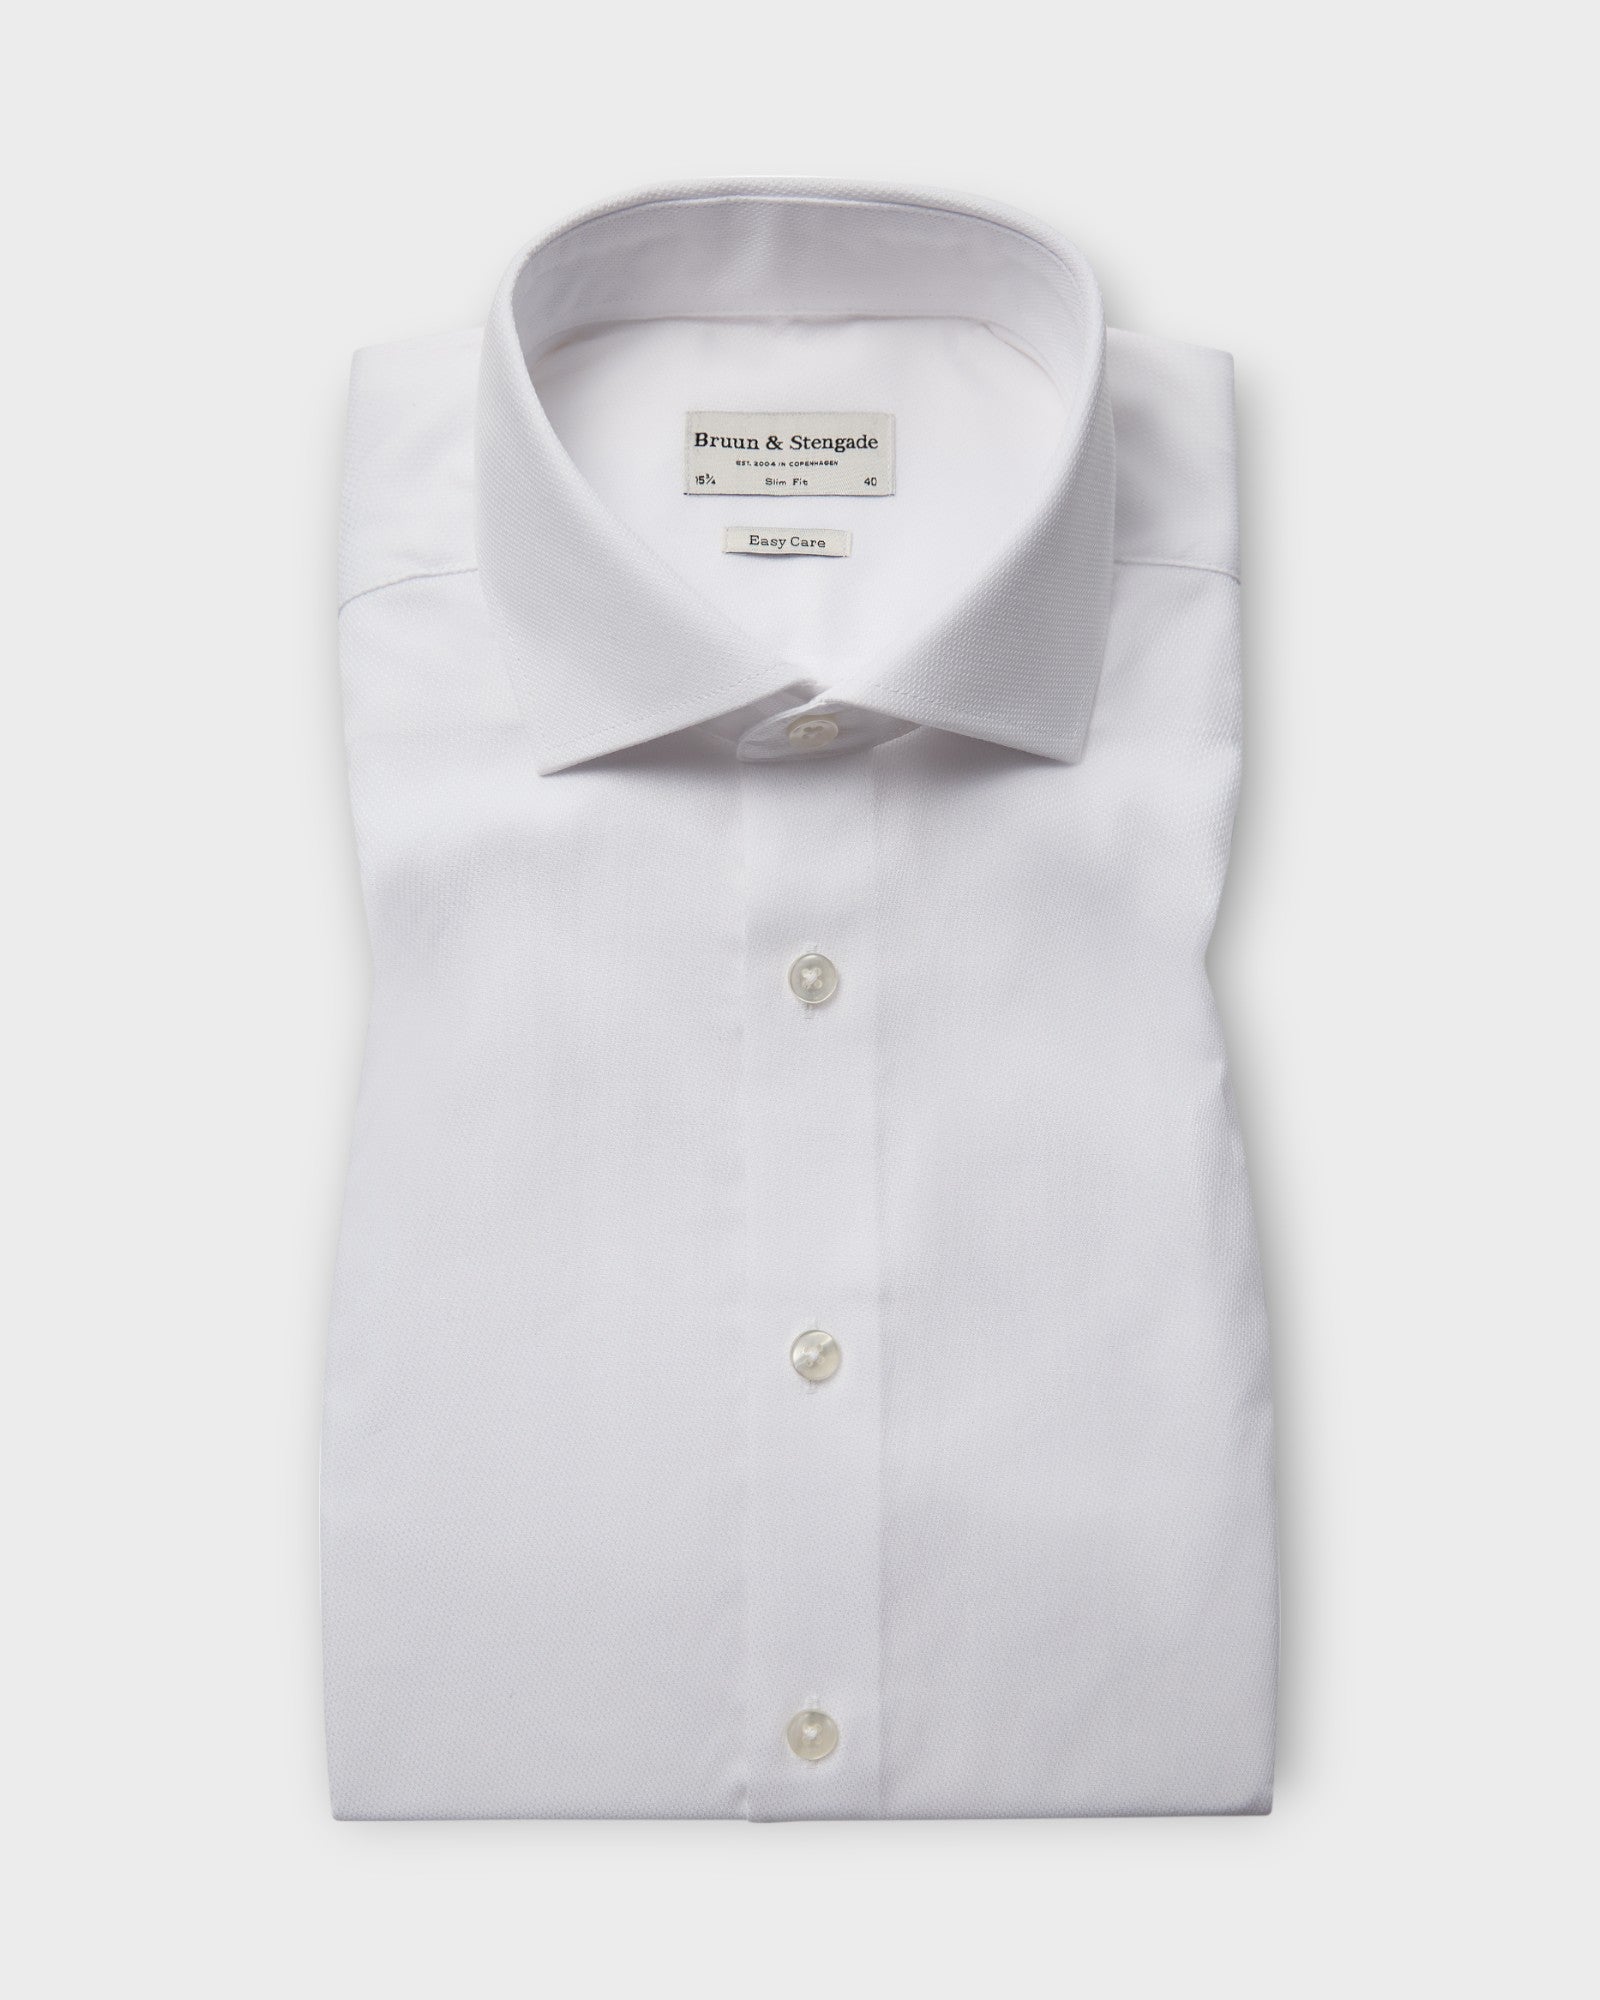 Reed Slim Fit Shirt White fra Bruun og Stengade. Hvid langærmet herre skjorte. Her set forfra.